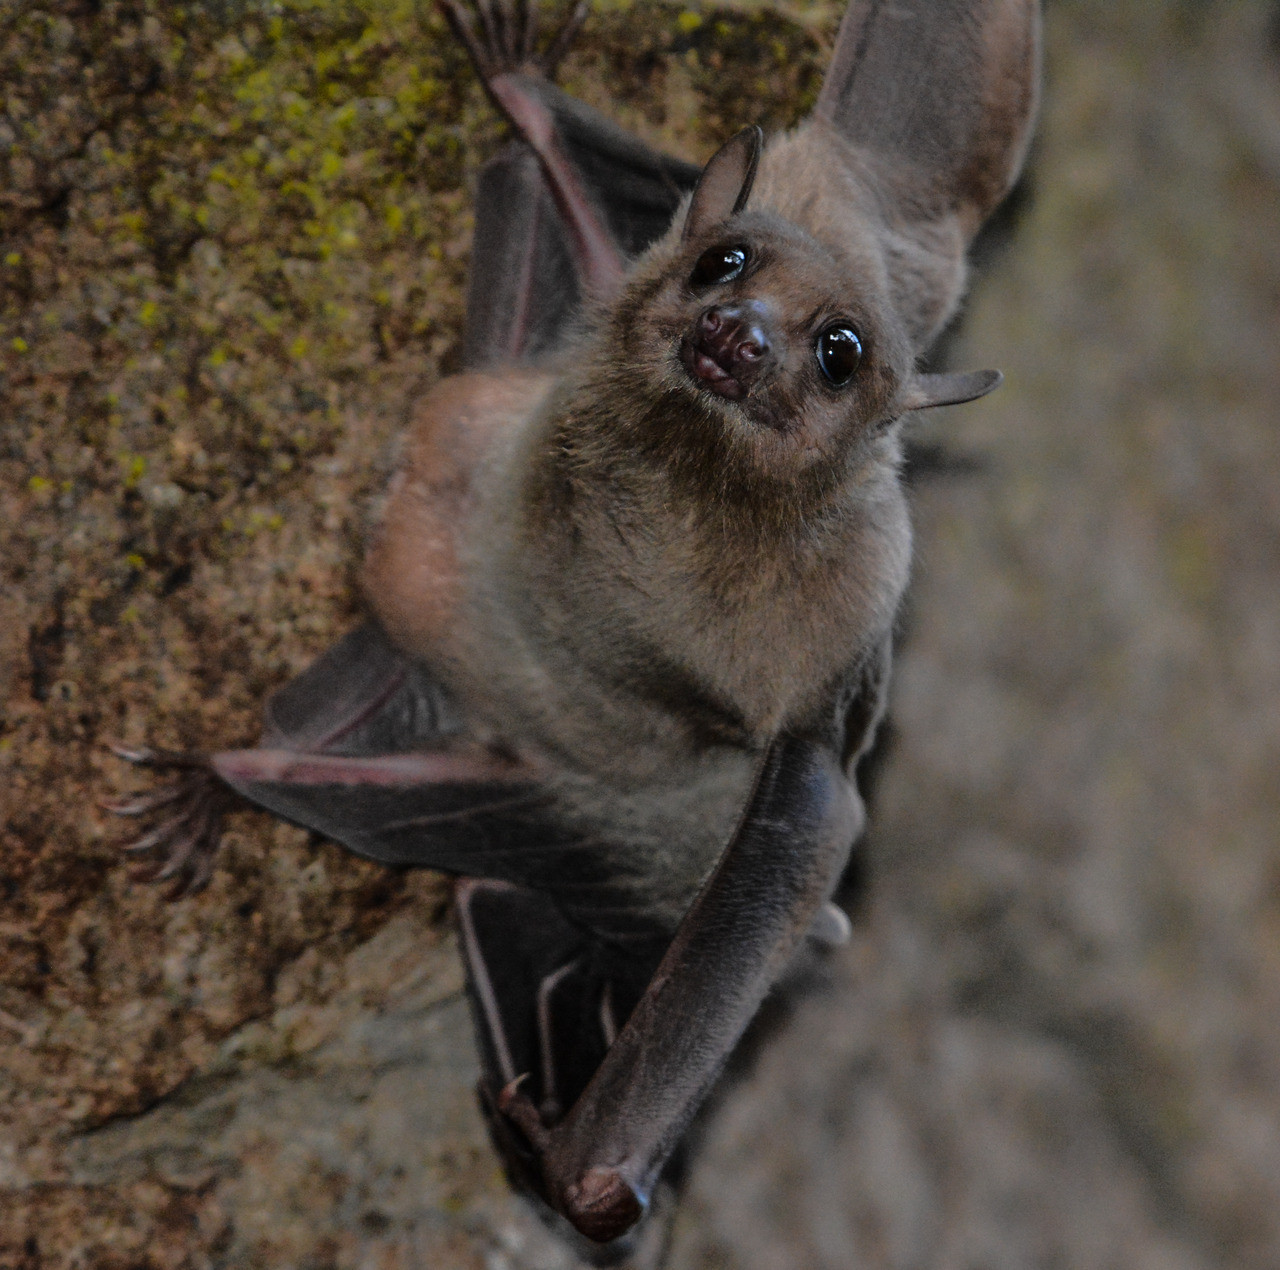 Egyptian Fruit Bat
Rousettus aegyptiacus
Source: Here